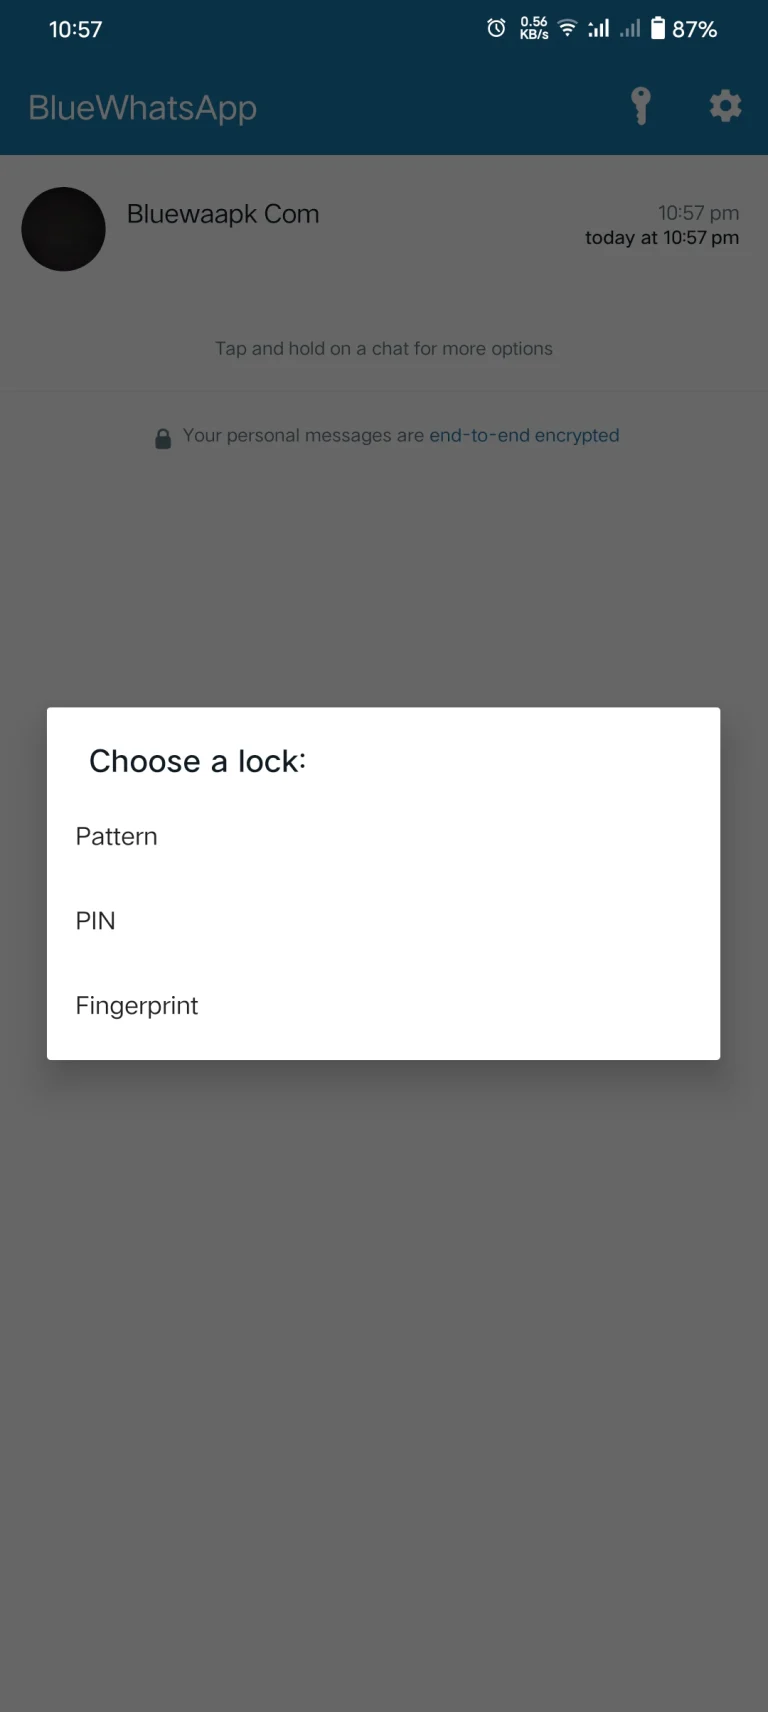 select your lock pattern in blue WhatsApp